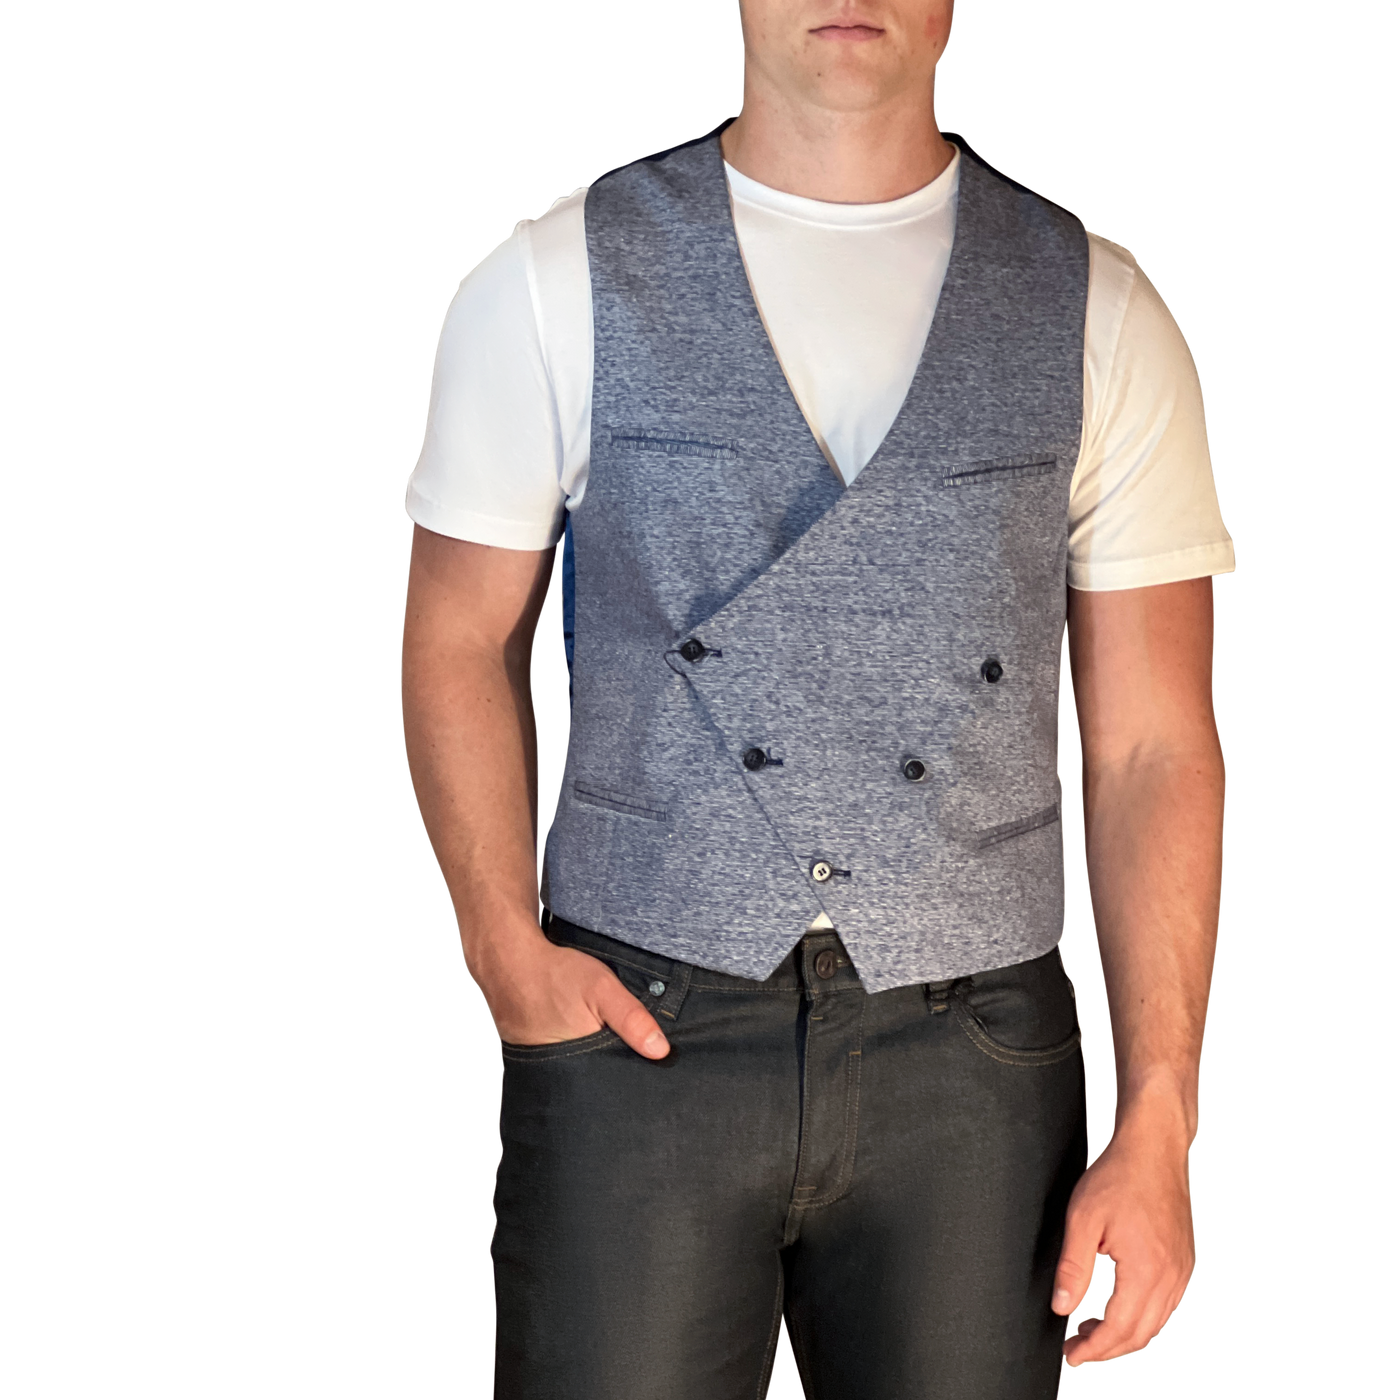 Gotstyle Fashion - Christopher Bates Vests Linen / Wool Blend Vest - Blue